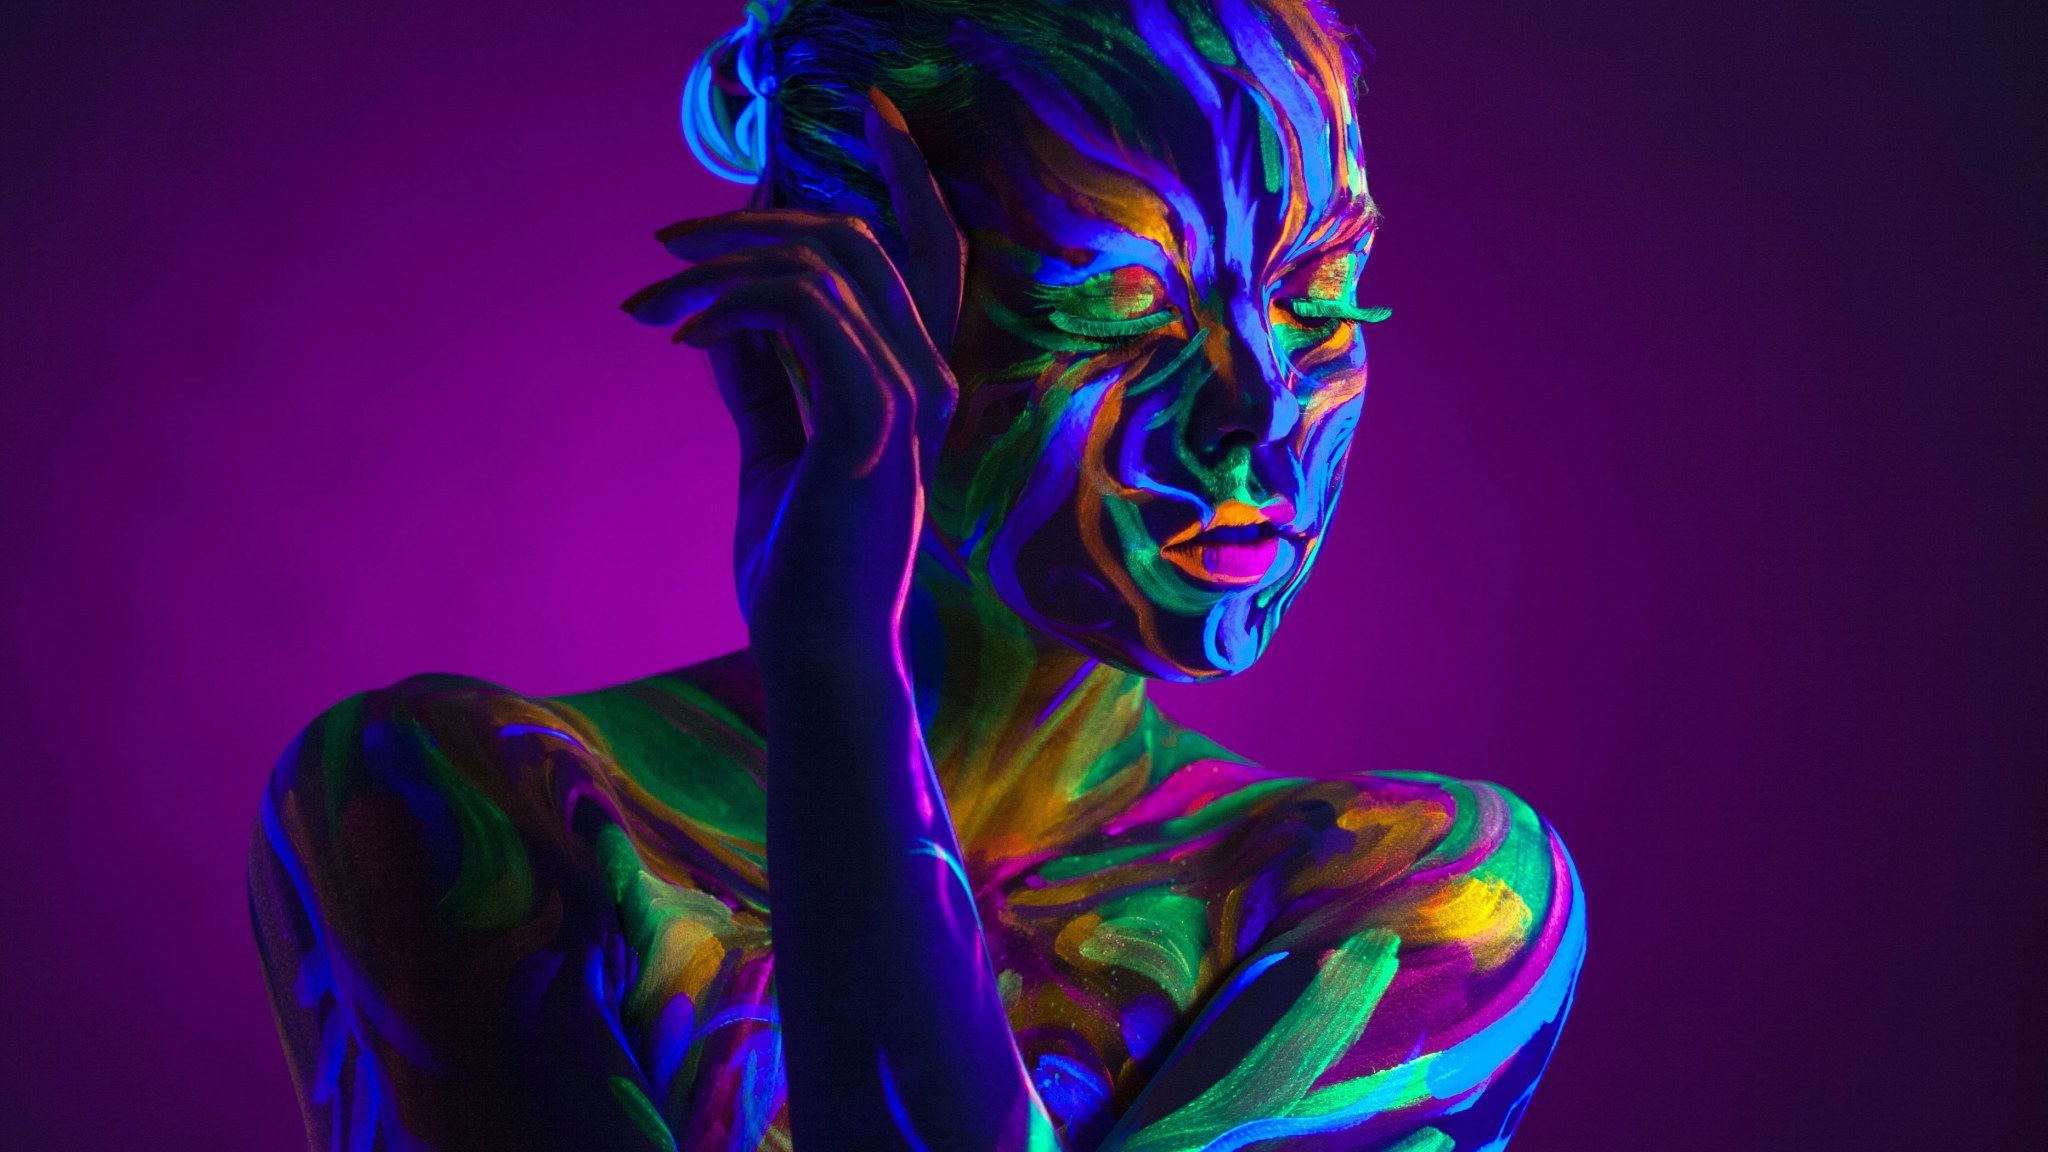 Multicolored body paint wallpaper, women, neon, purple background, colorful • Wallpaper For You HD Wallpaper For Desktop & Mobile